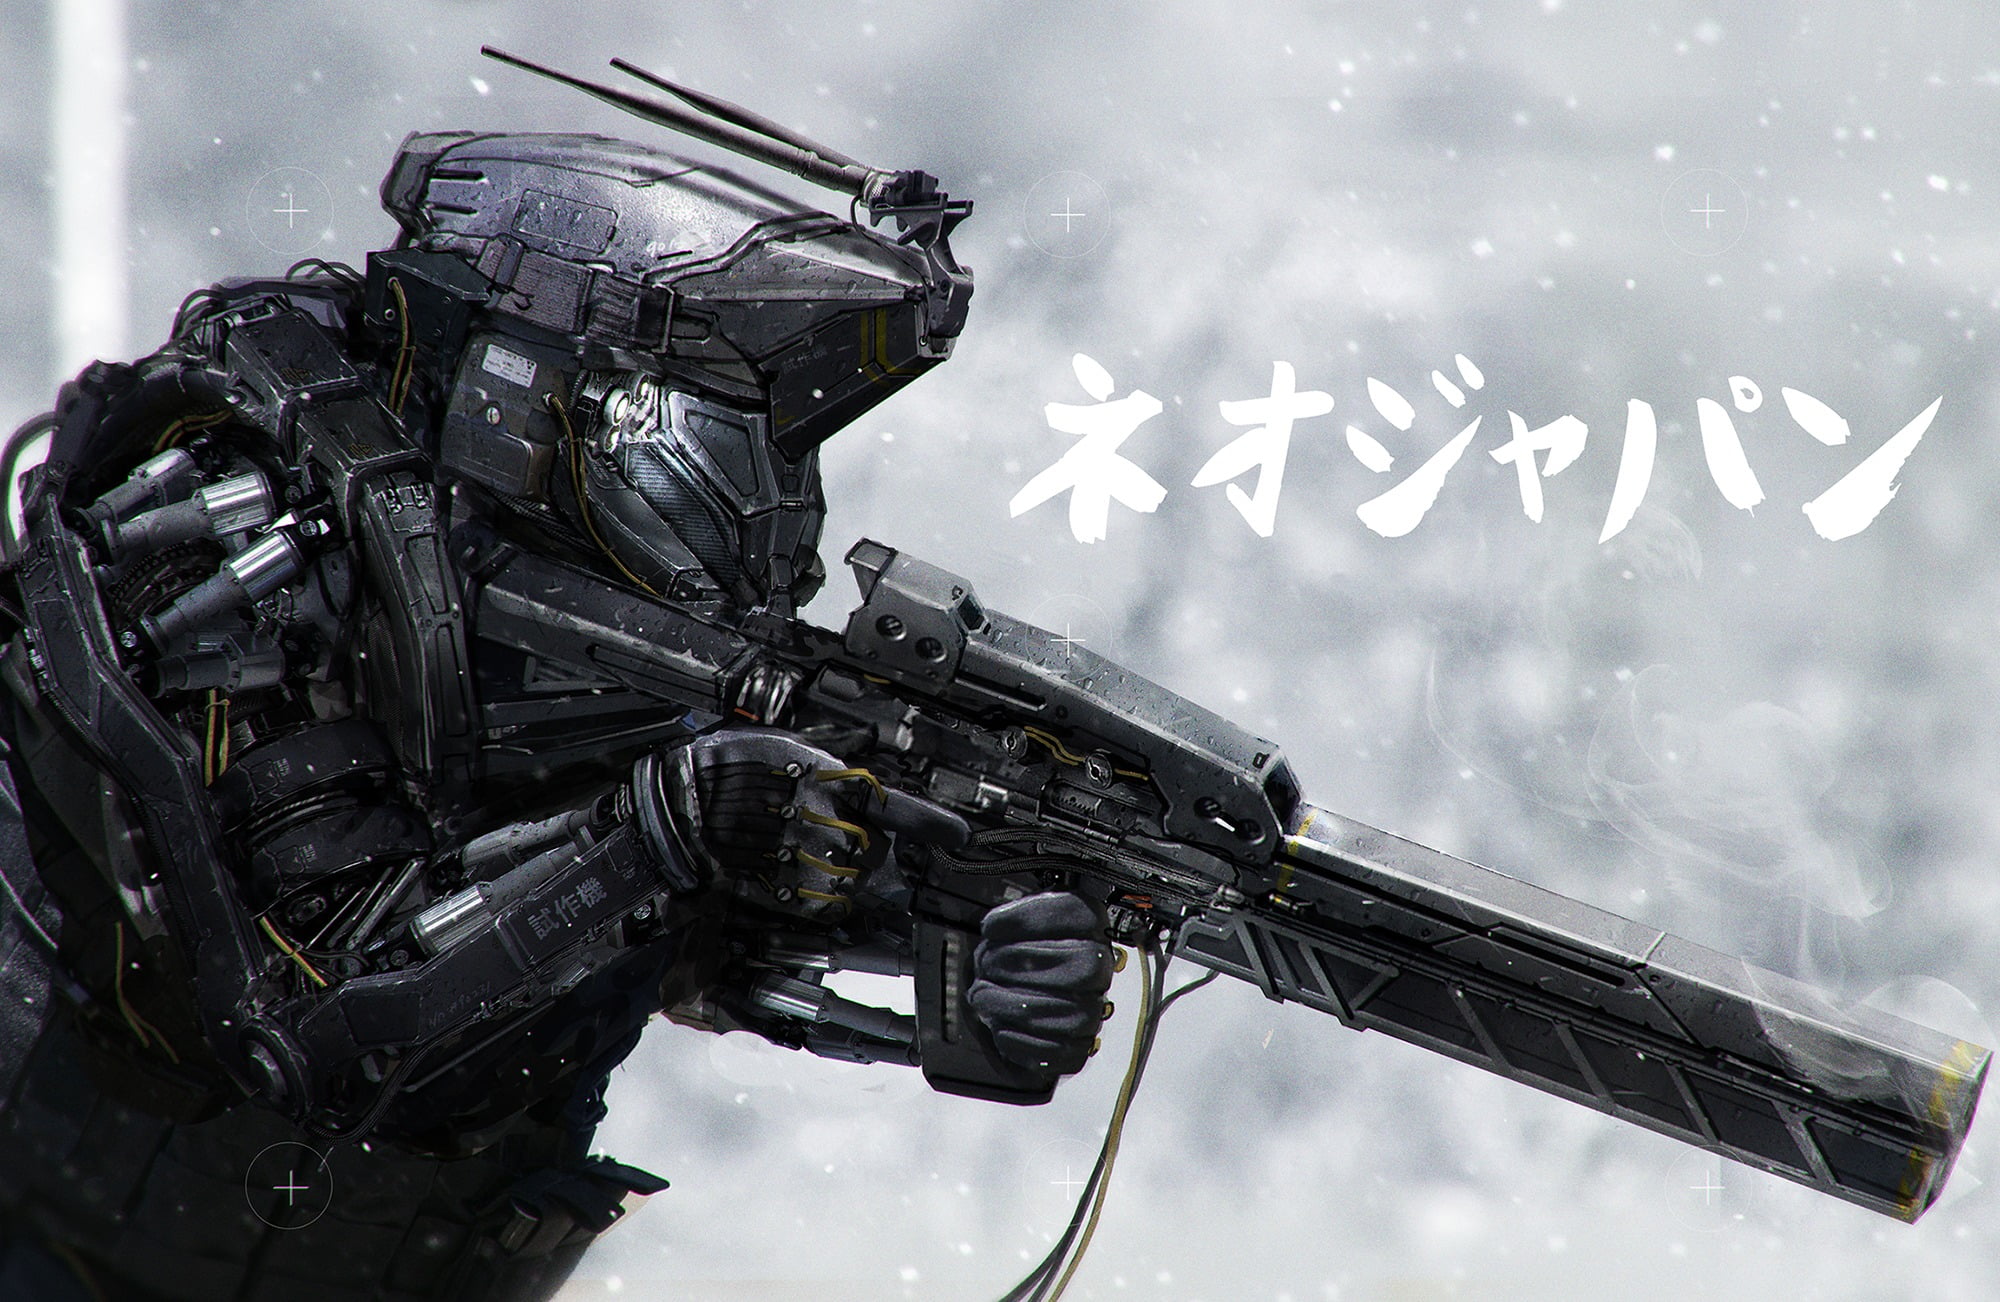 black cyborg wallpaper, fiction, robot, machine, the exoskeleton